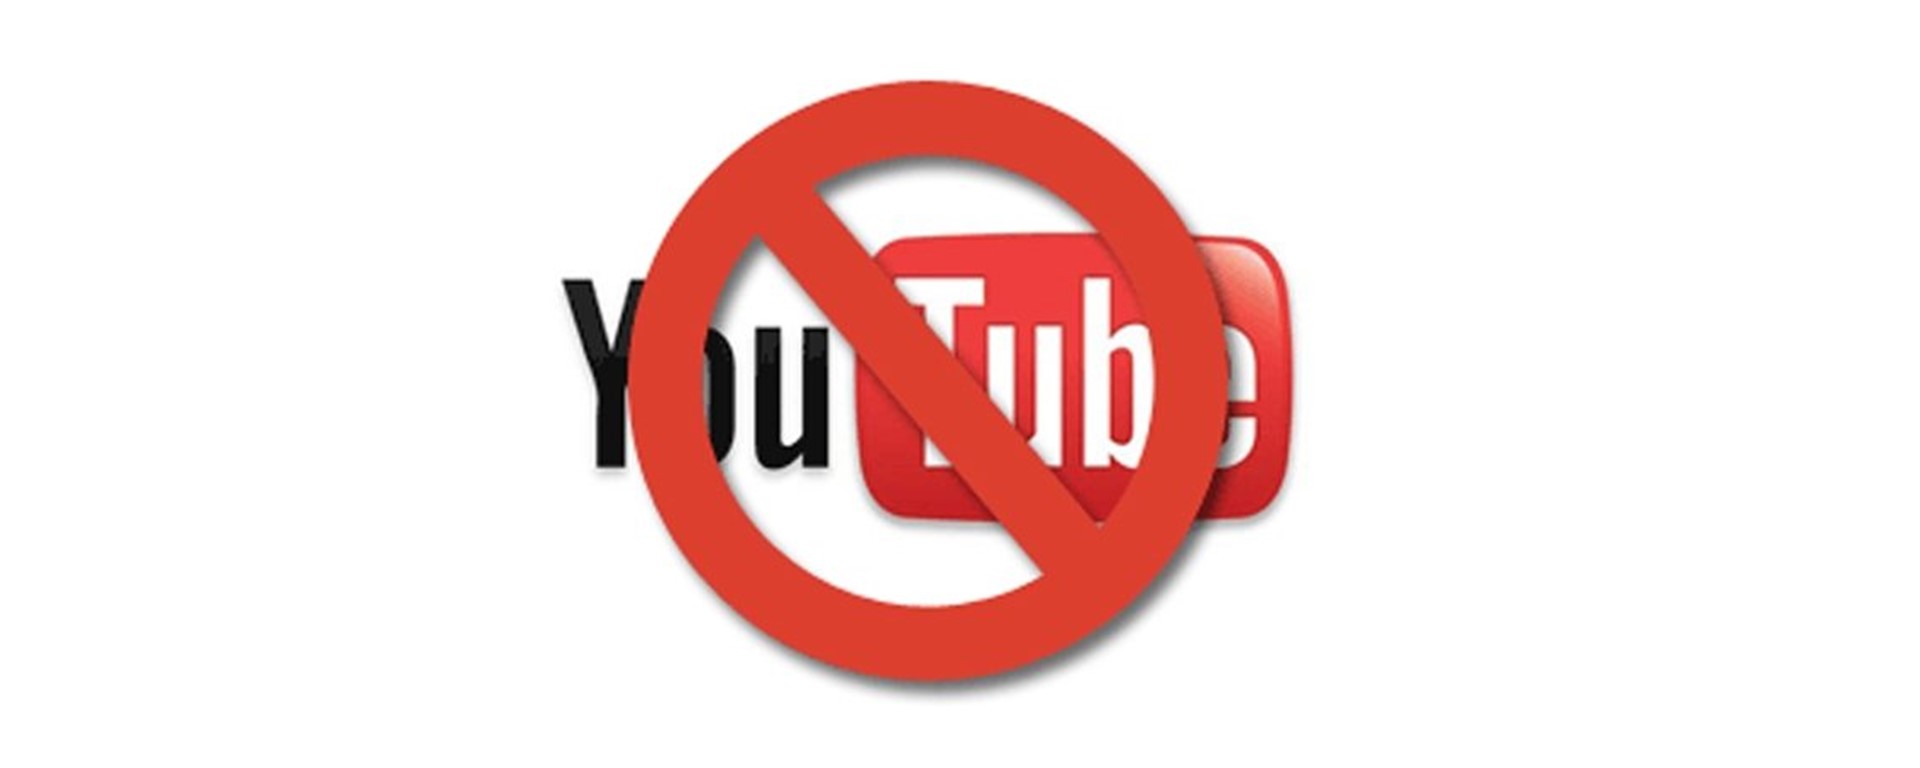 Youtube без интернета